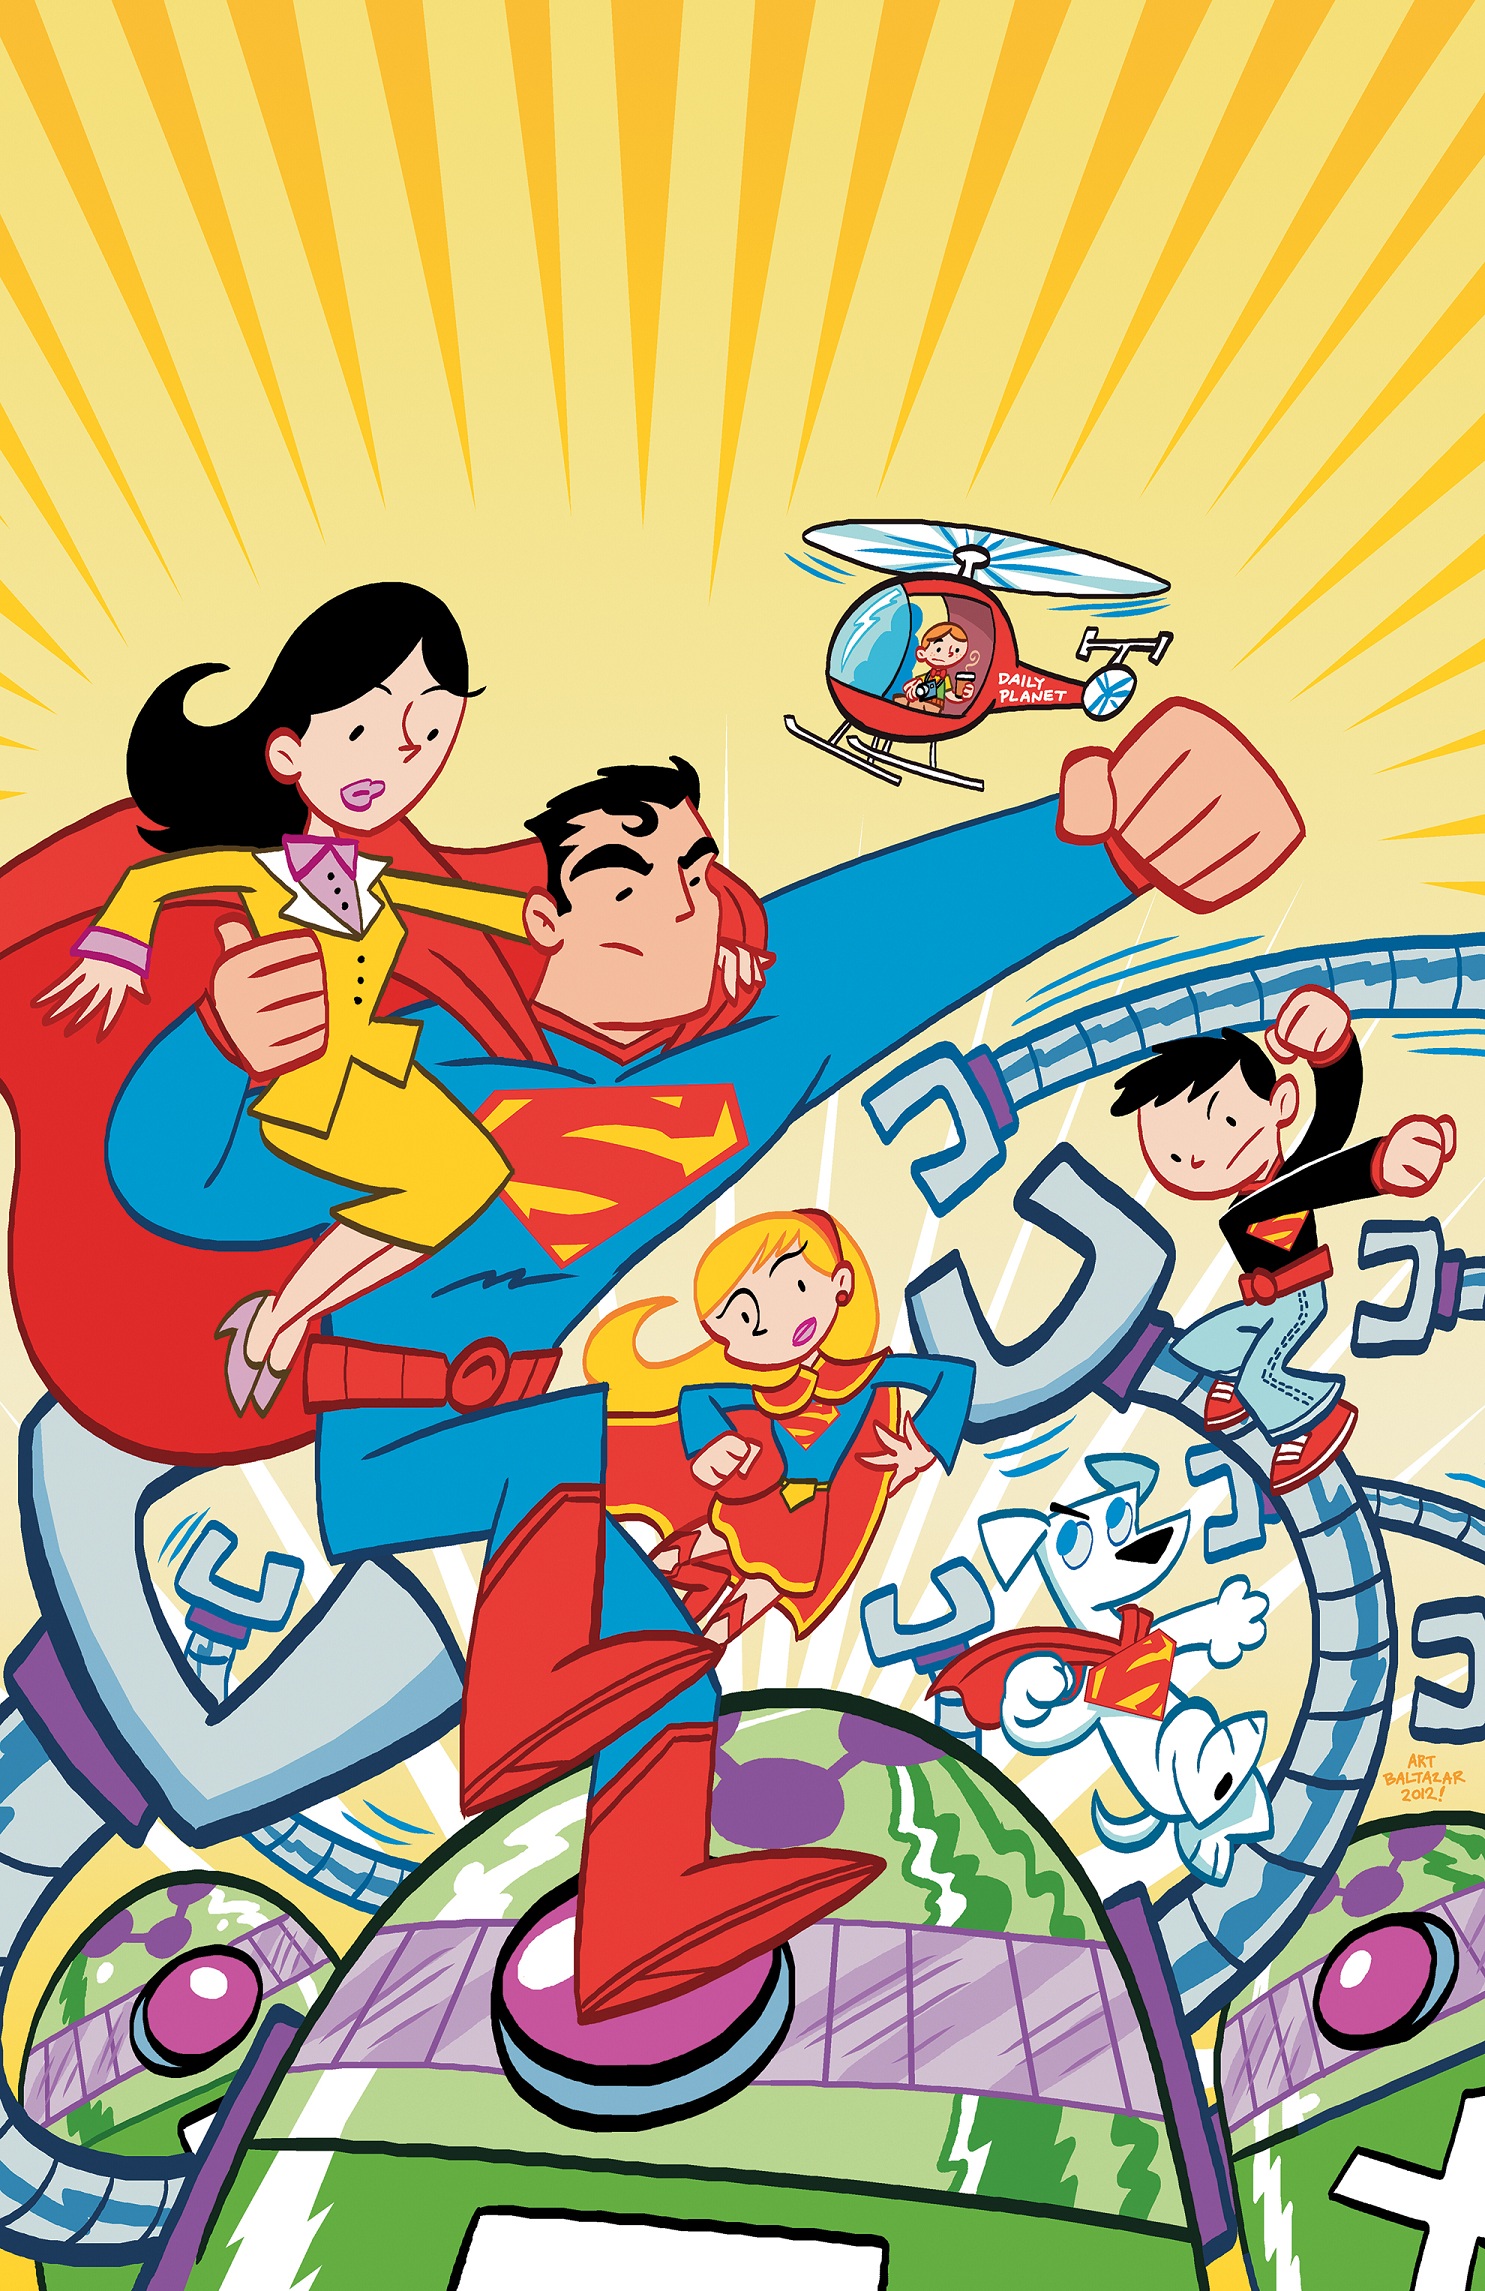 SUPERMAN FAMILY ADVENTURES #1